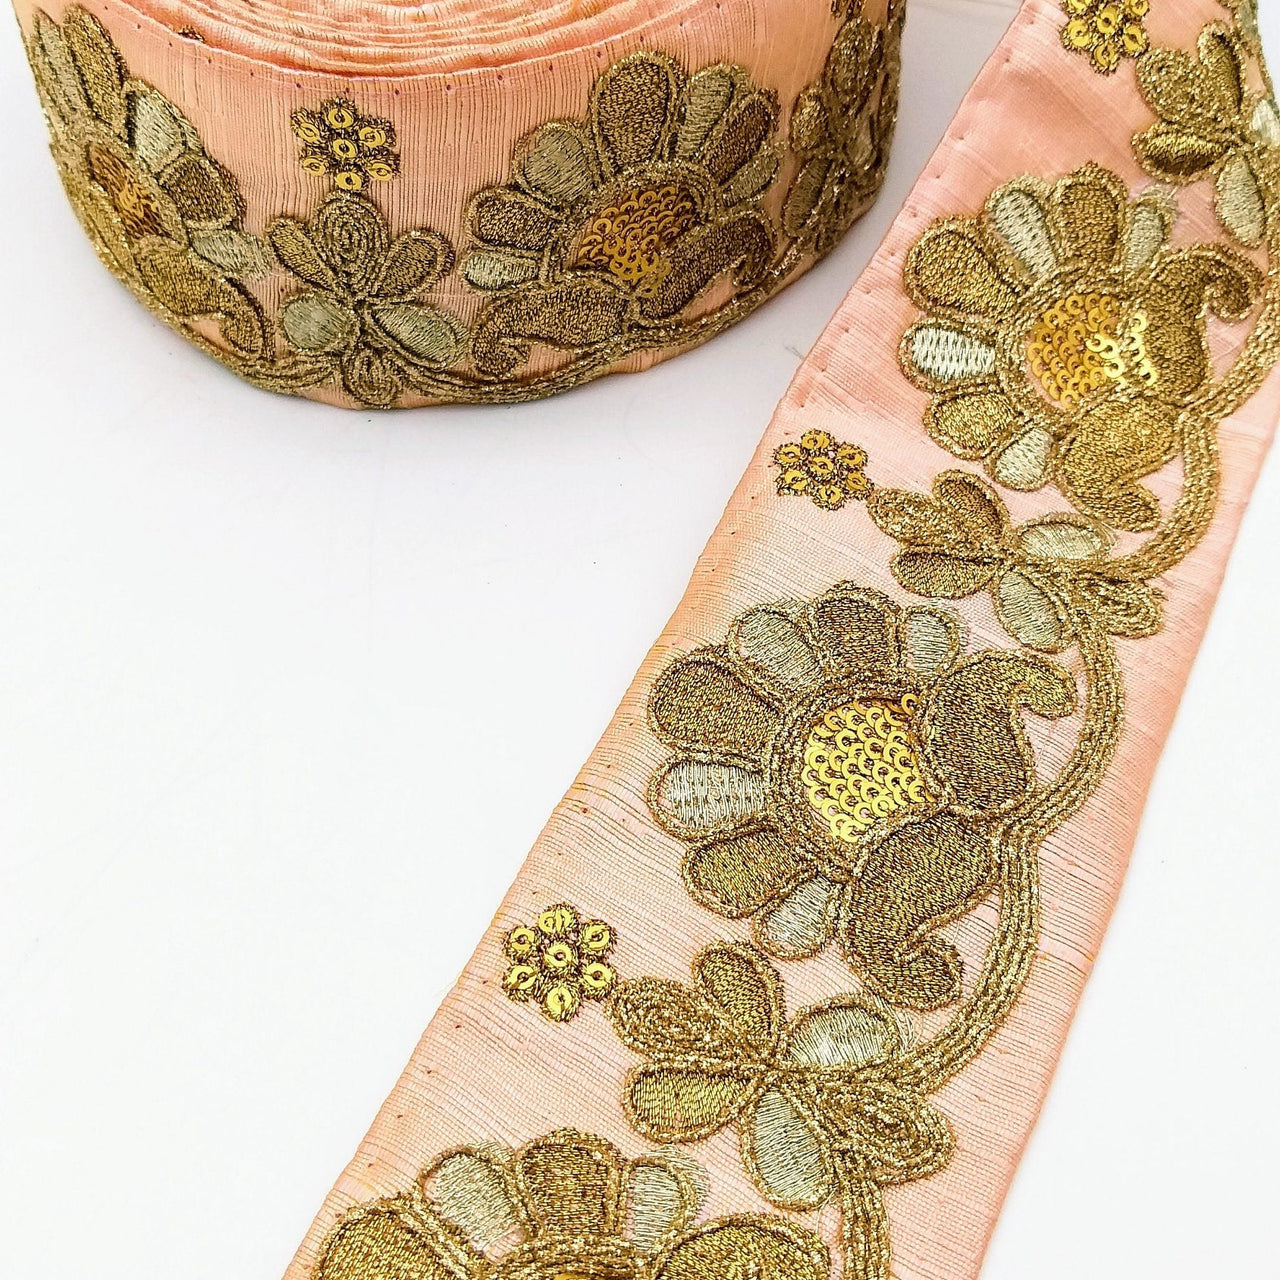 Peach Art Silk Trim In Gold Floral Embroidery, Gold Embroidered Flowers Border, Floral Trim